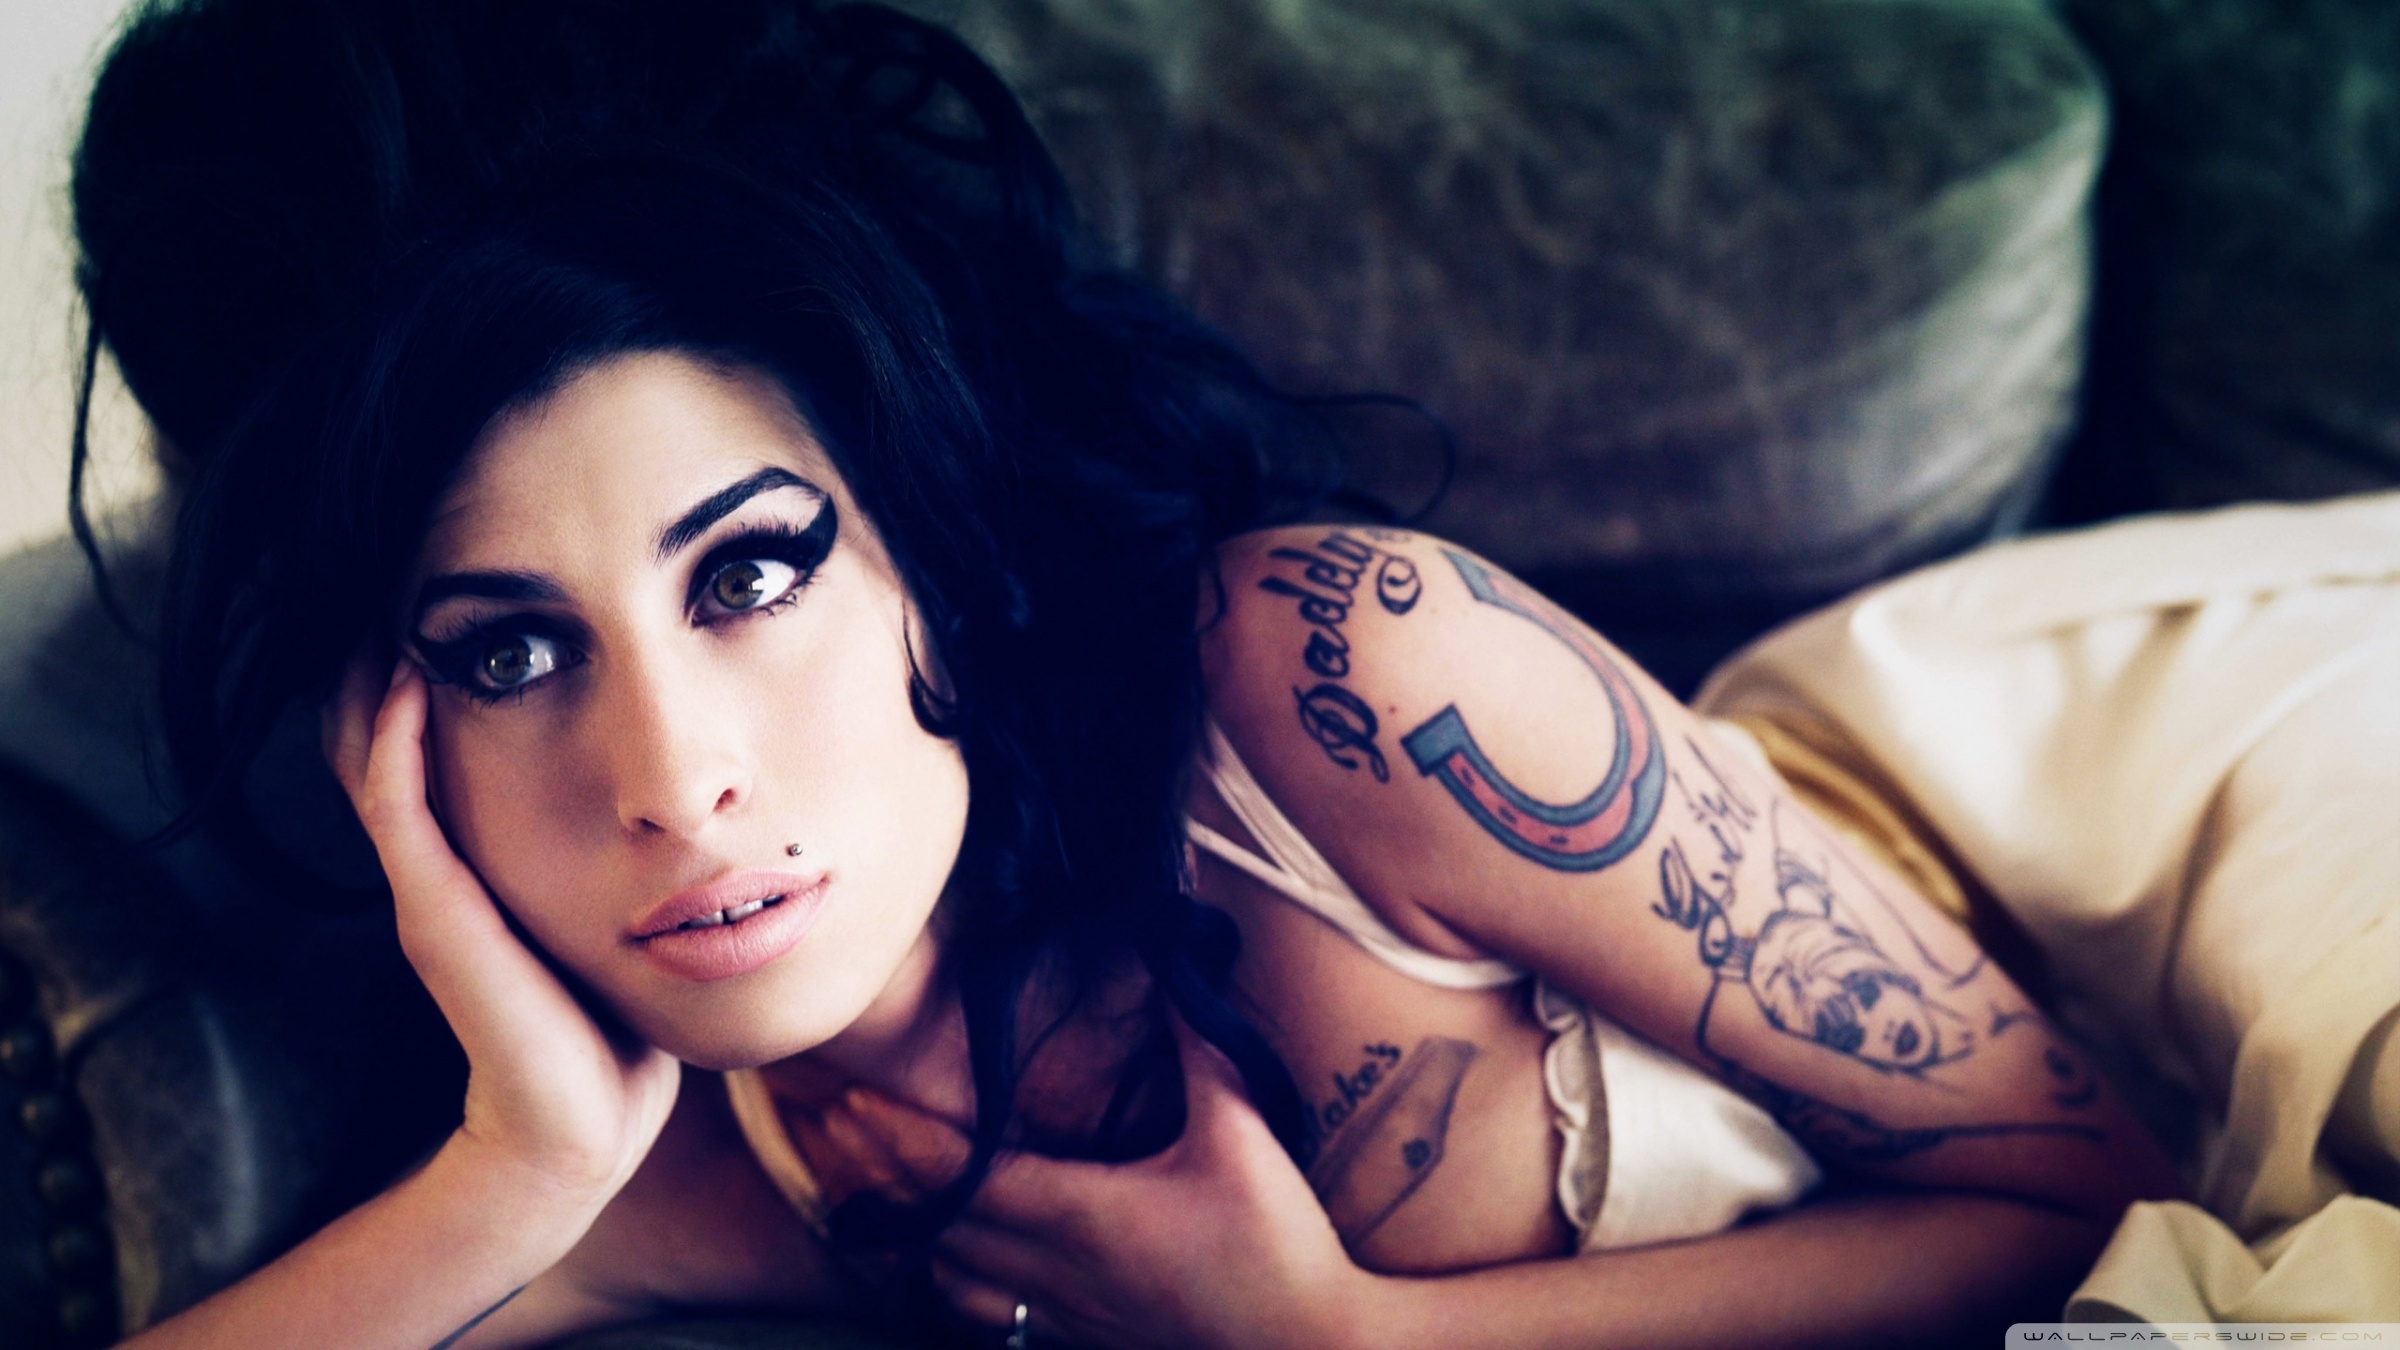 Amy Winehouse, fashion icon dallo stile unico